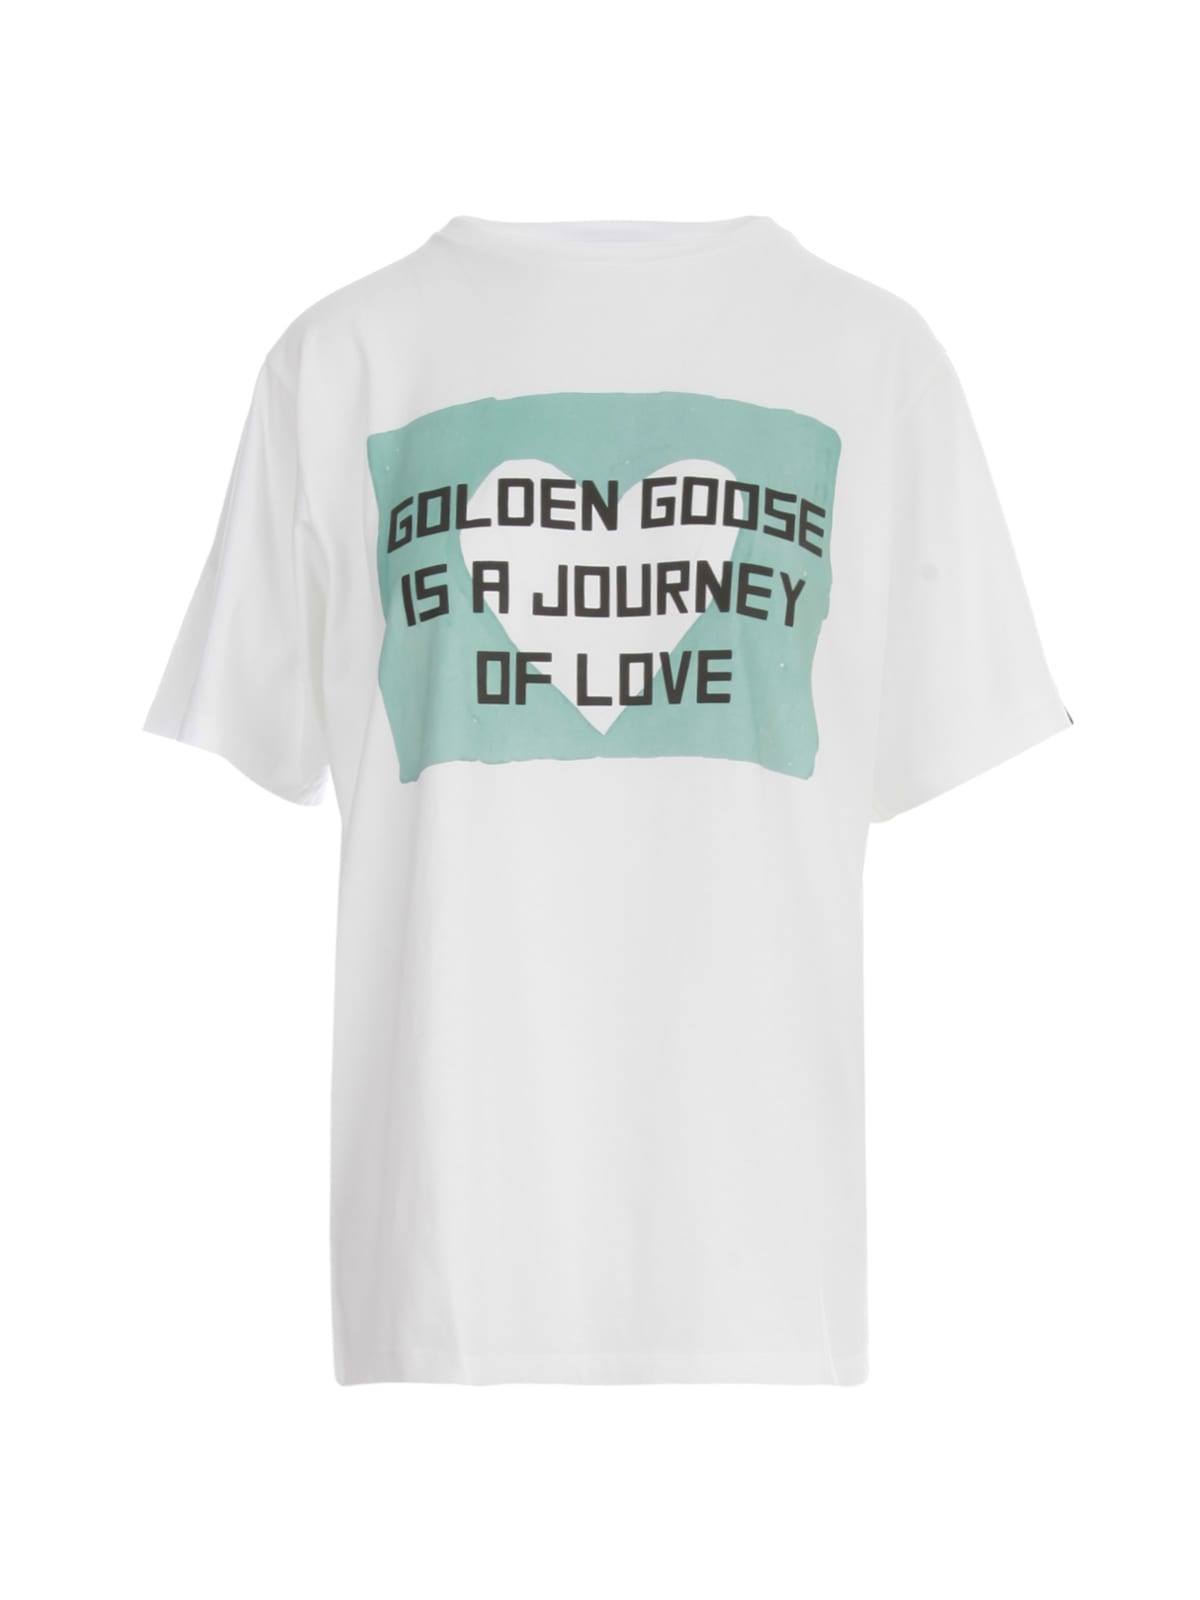 Golden Goose T-shirt Aira Boyfriend S/s Journey Of Love On Heart/digital